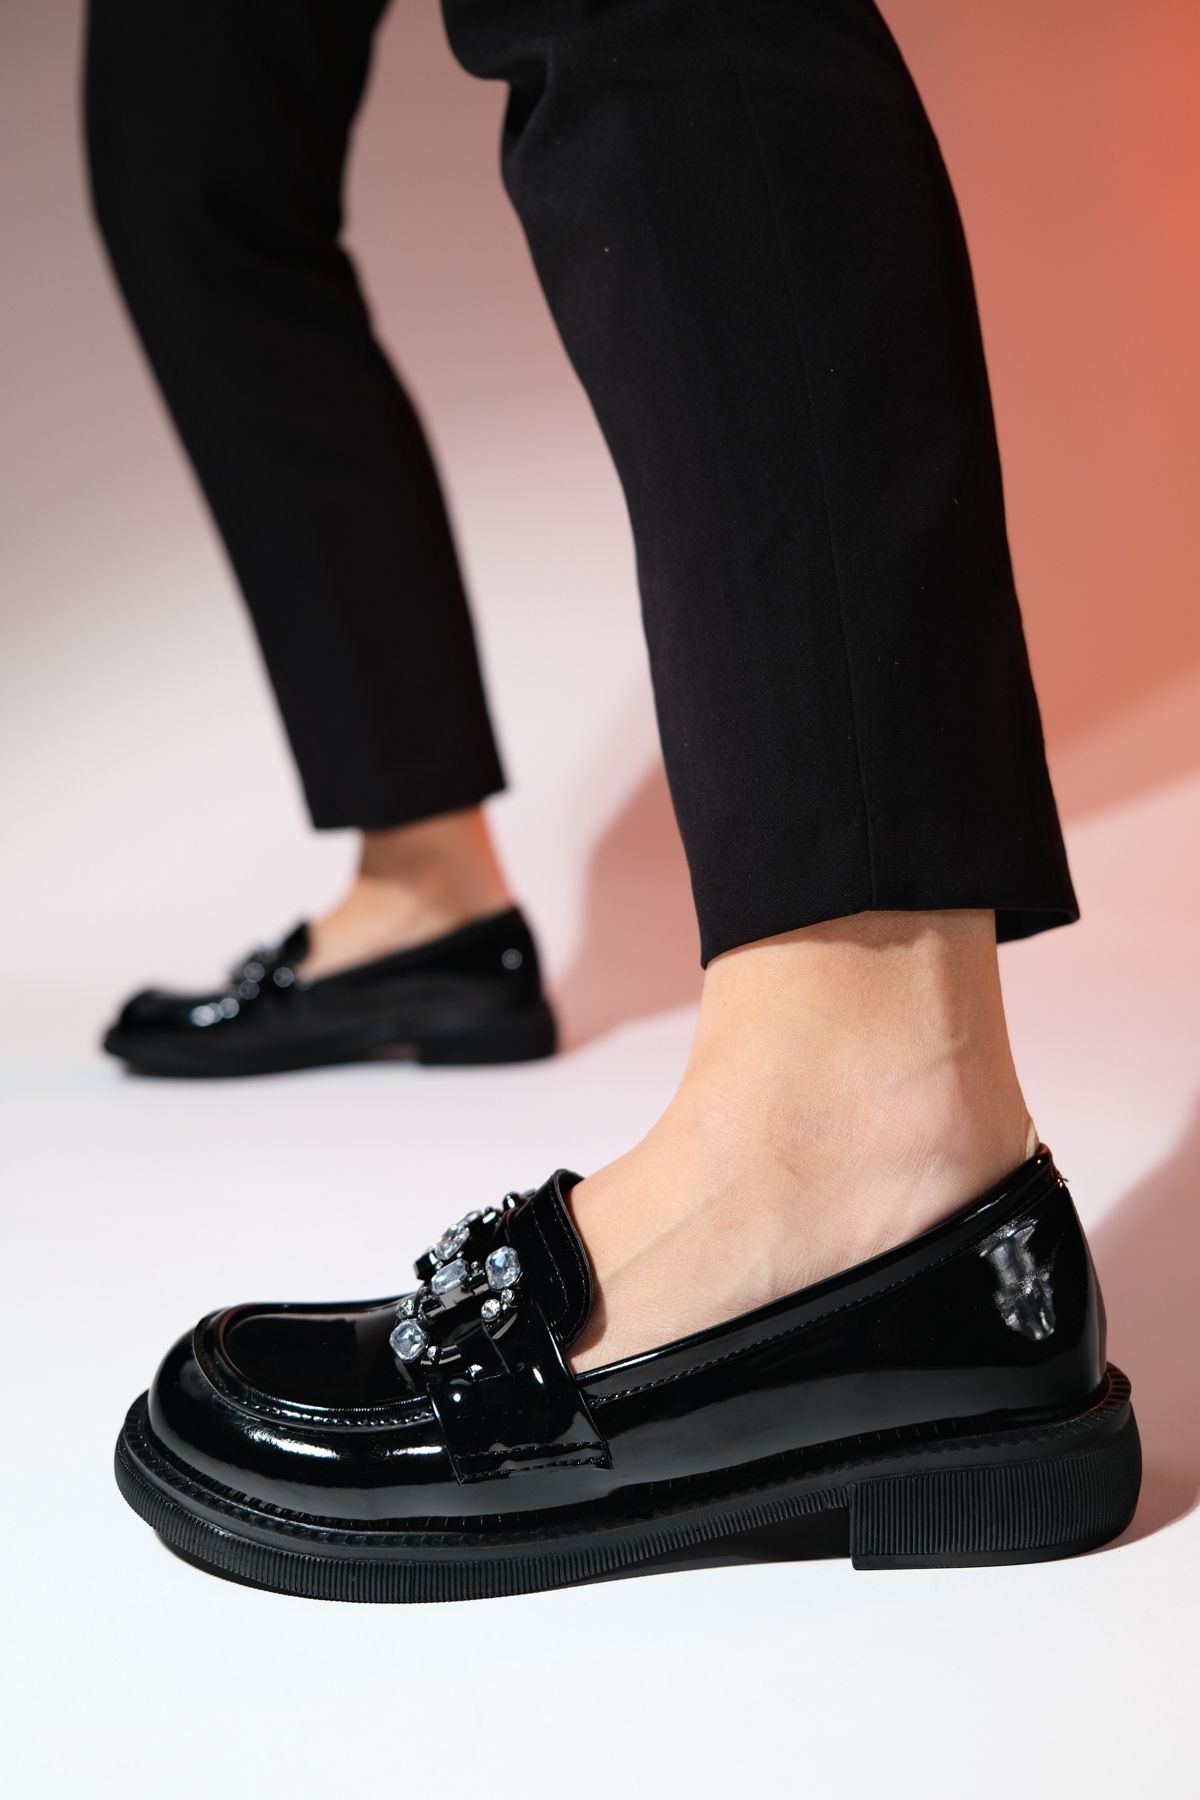 luvishoes NORMAN Siyah Rugan Taş Tokalı Kadın Loafer Ayakkabı